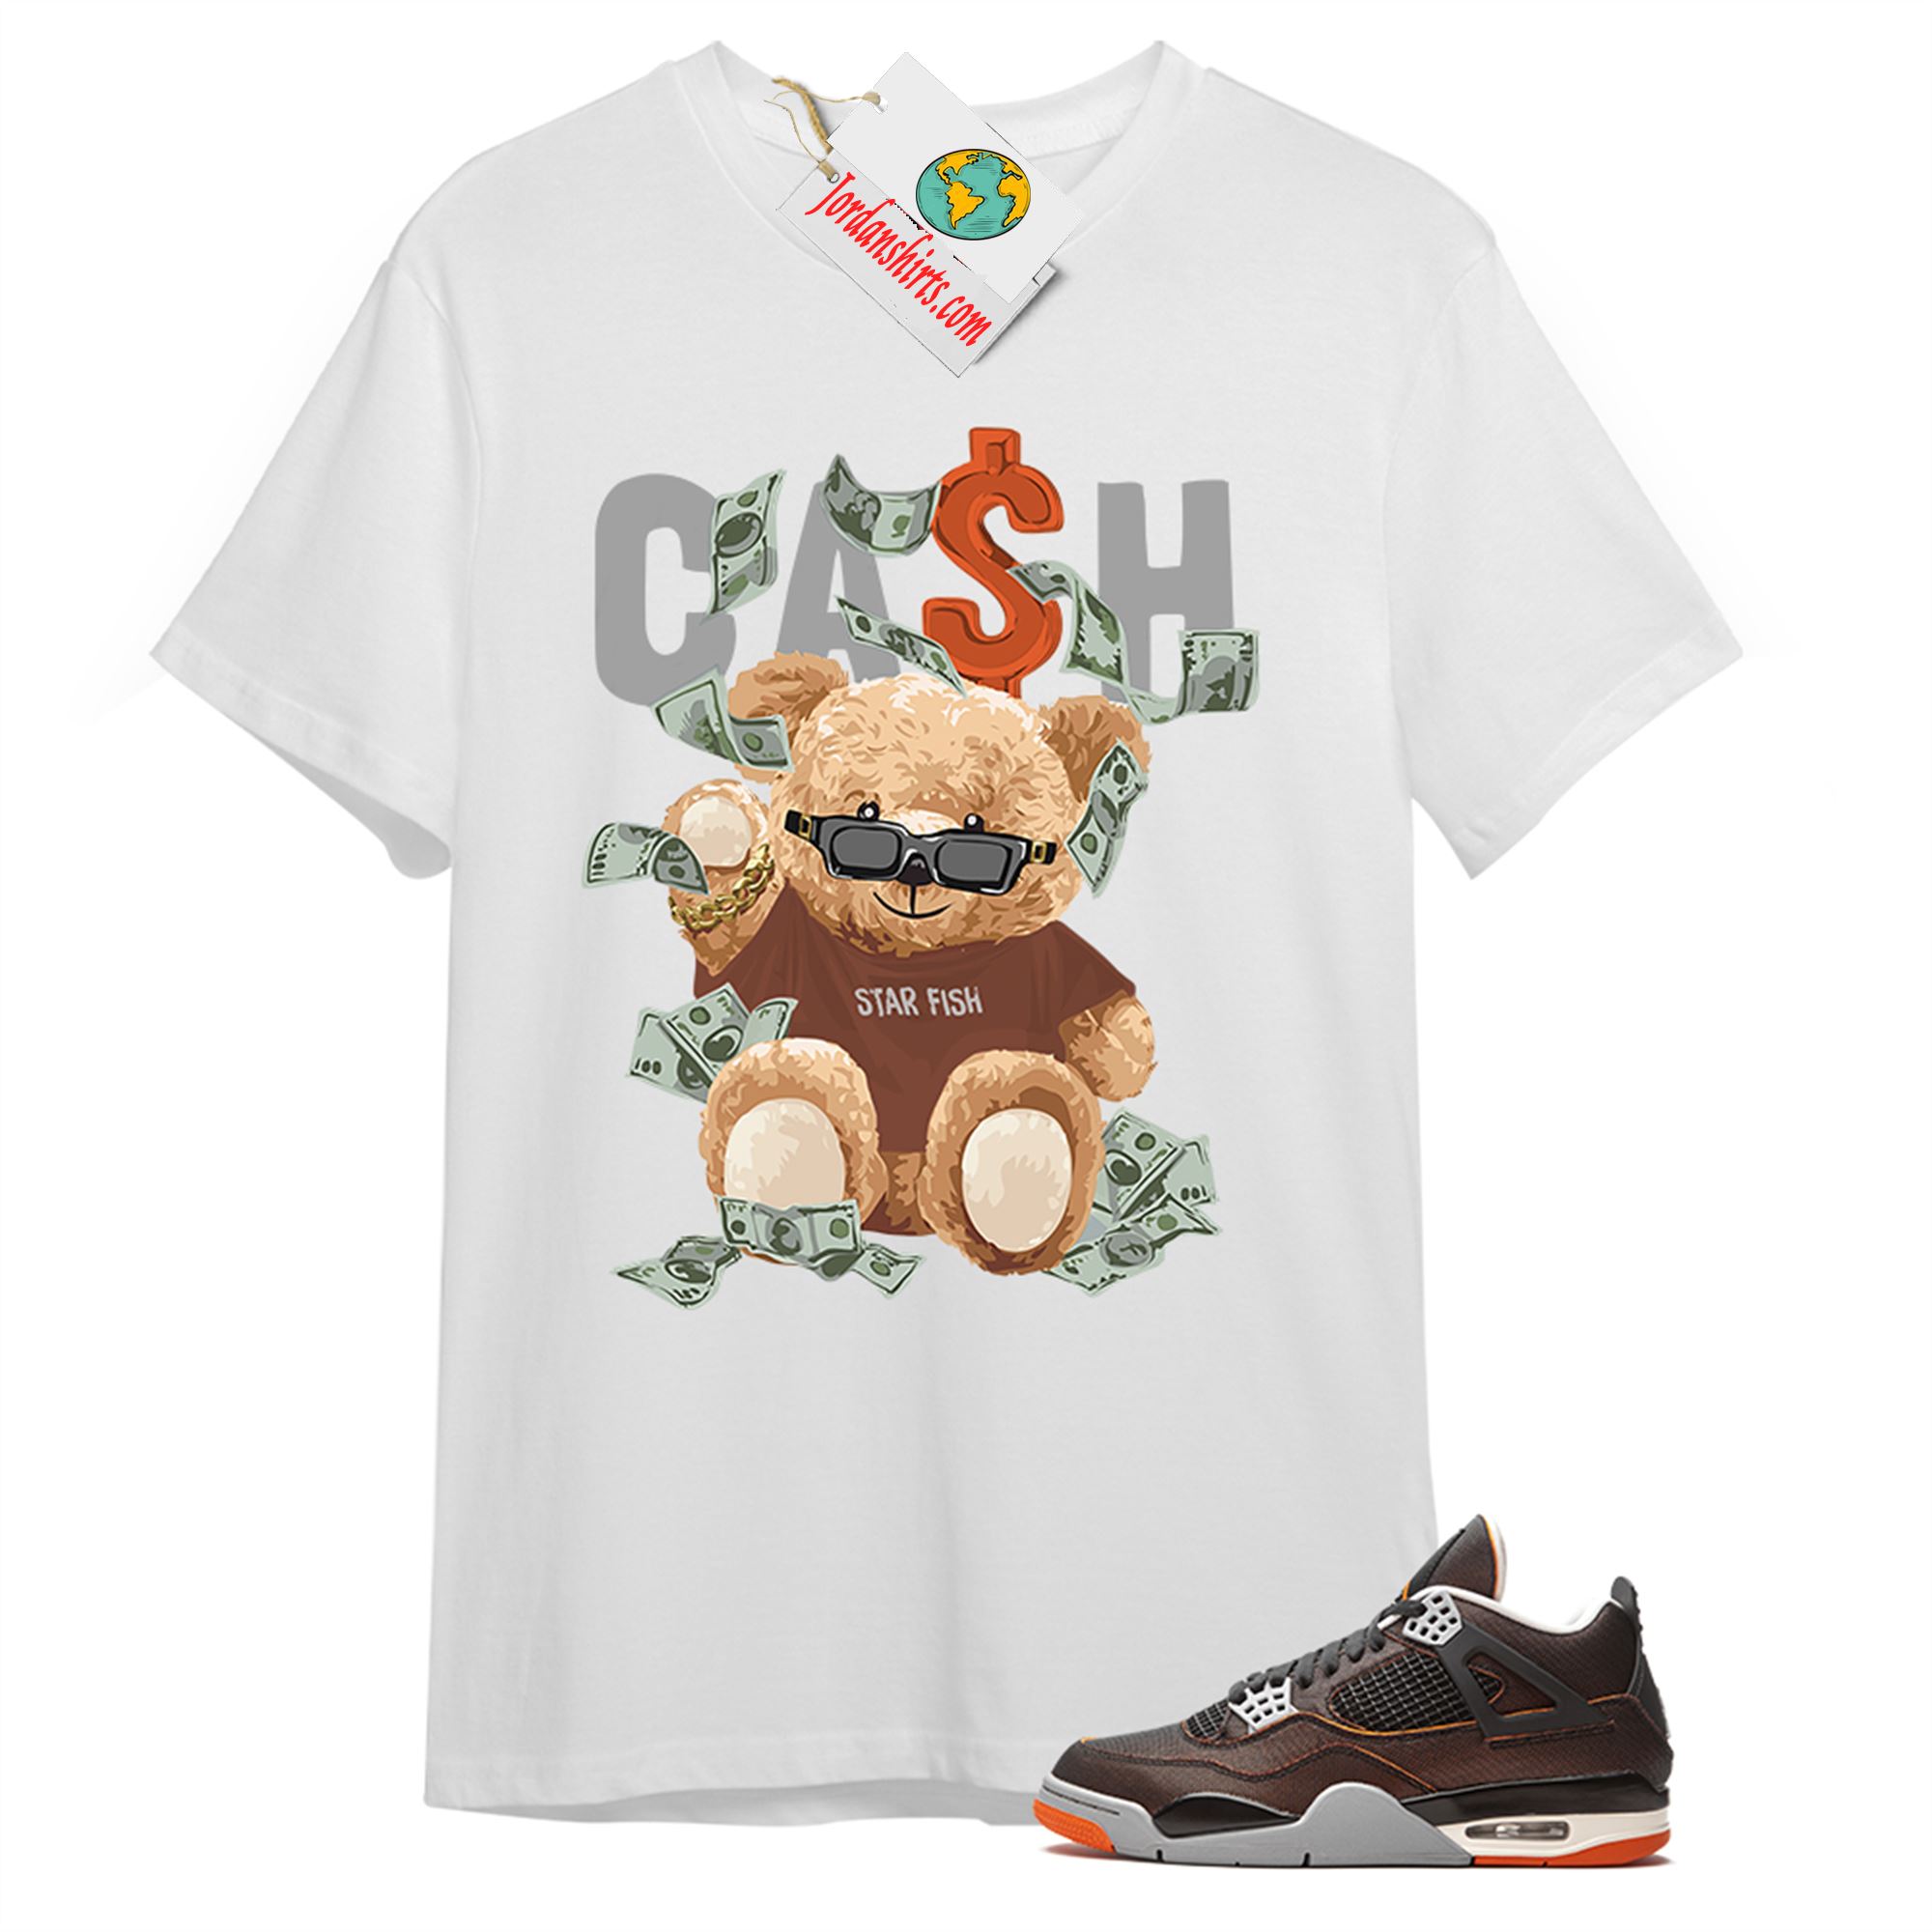 Jordan 4 Shirt, Cash Teddy Bear In Sunglasses White T-shirt Air Jordan 4 Starfish 4s Full Size Up To 5xl